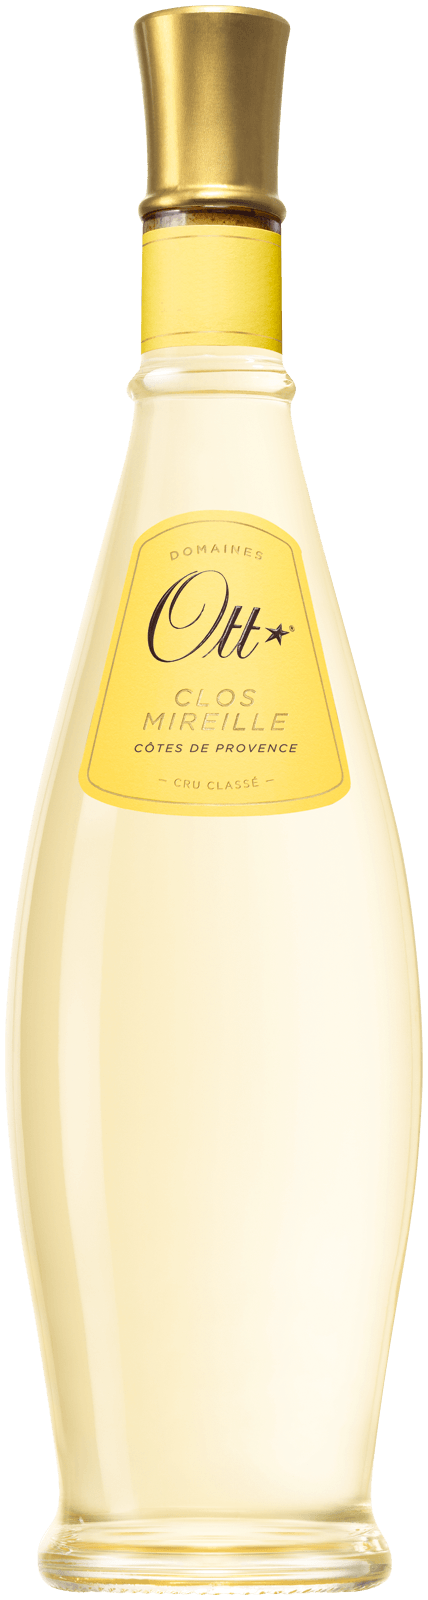 Magnum - 1,5 L - Côtes de Provence - 2018 - Clos Mireille - Cru Classé